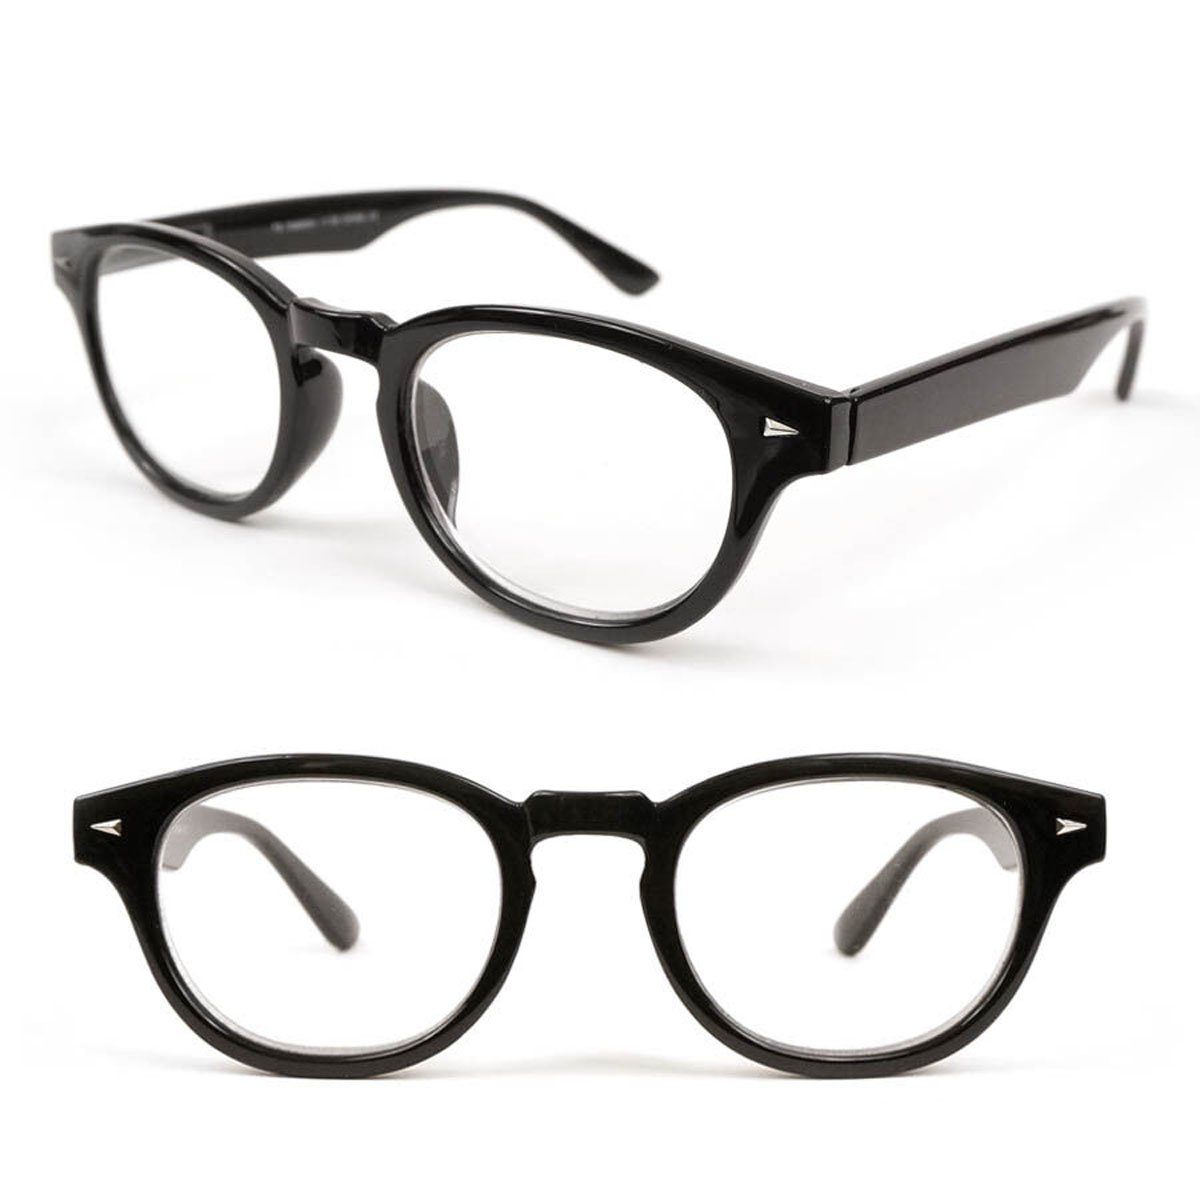 Medium Round Classic Frame Reading Glasses Geek Retro Vintage Style 100-375 - Black, +3.25